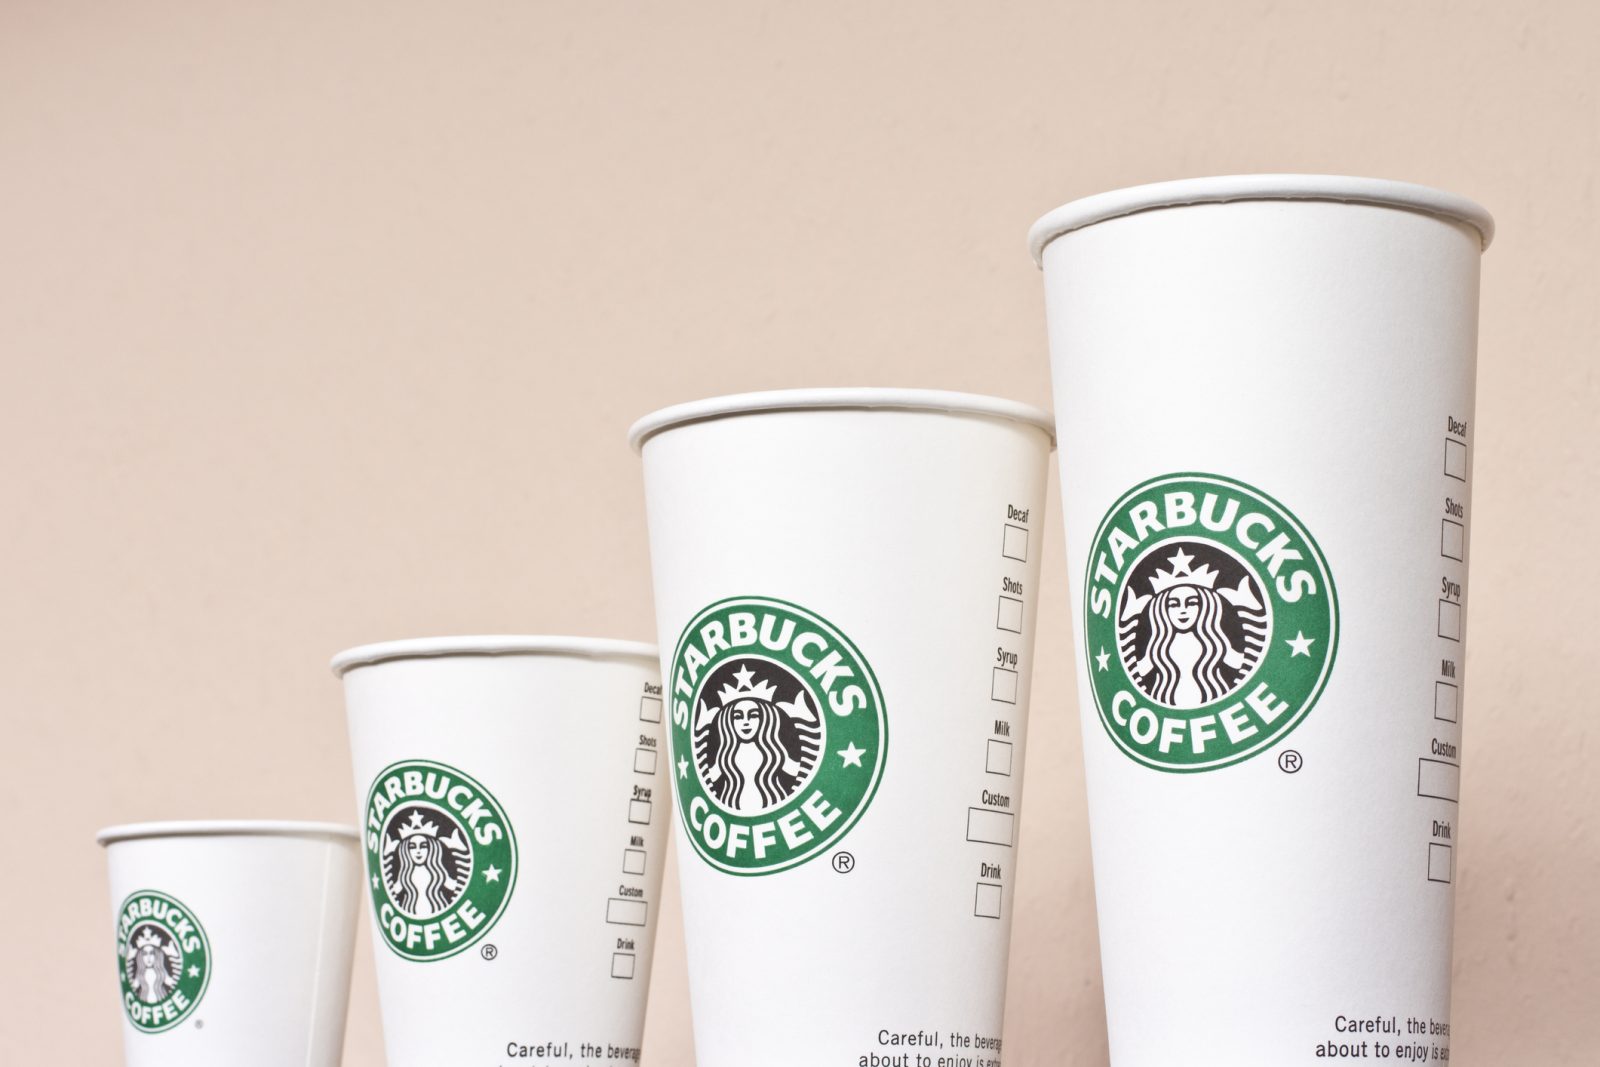 Starbucks Cup Sizes